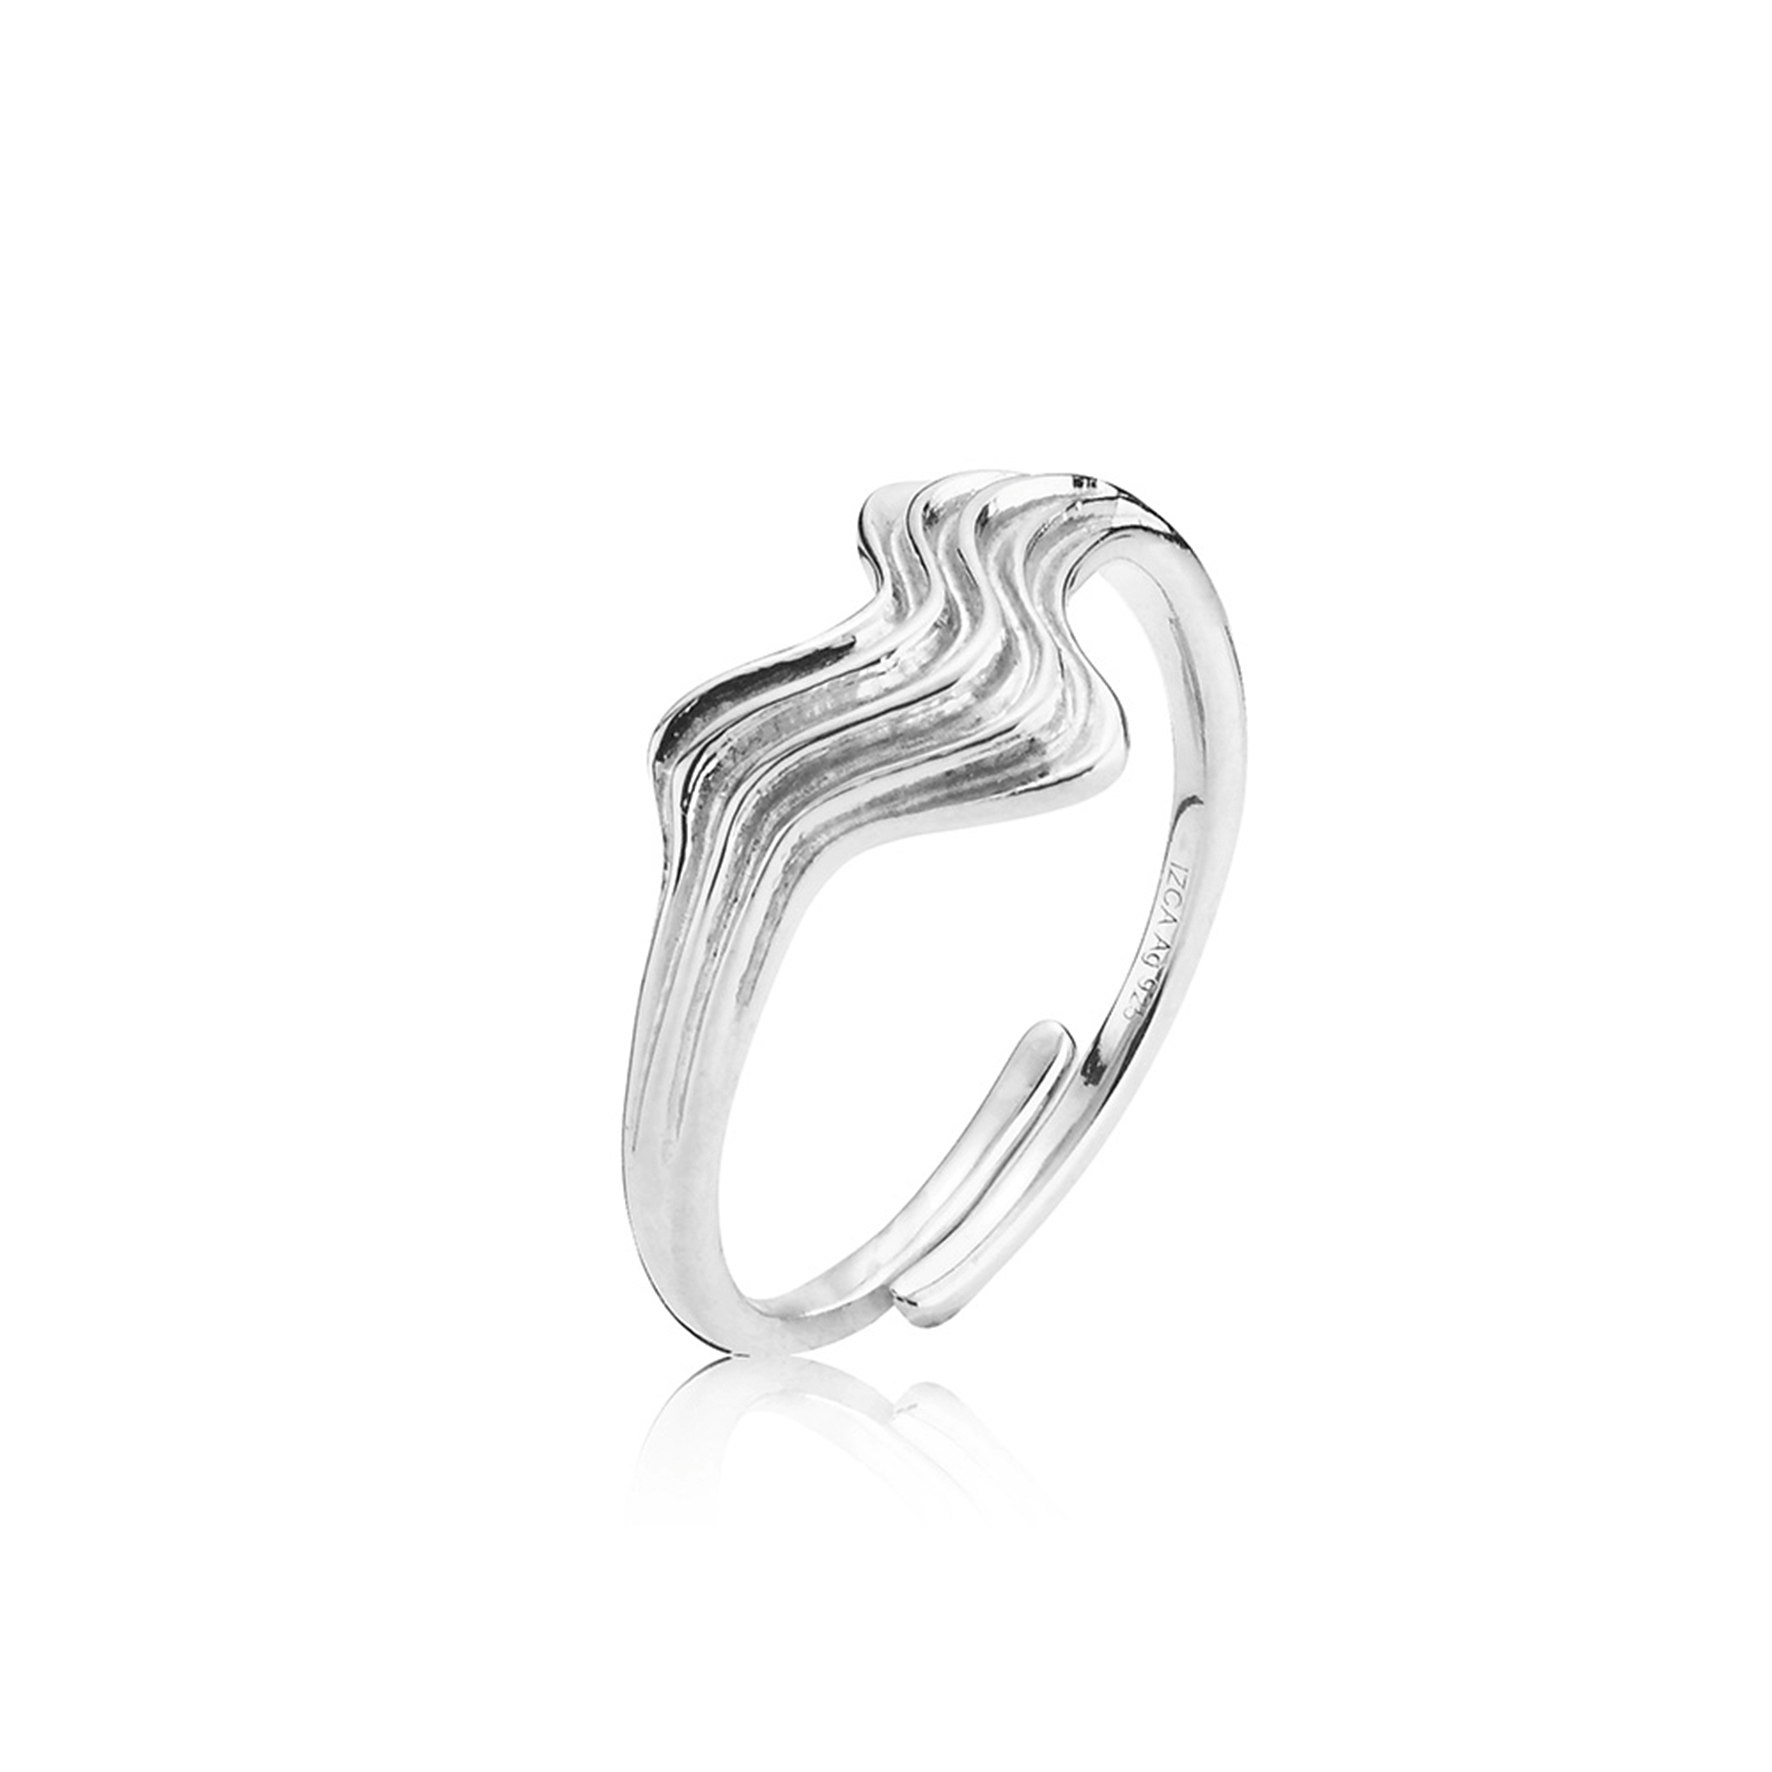 Silke x Sistie Waves Ring från Sistie i Silver Sterling 925